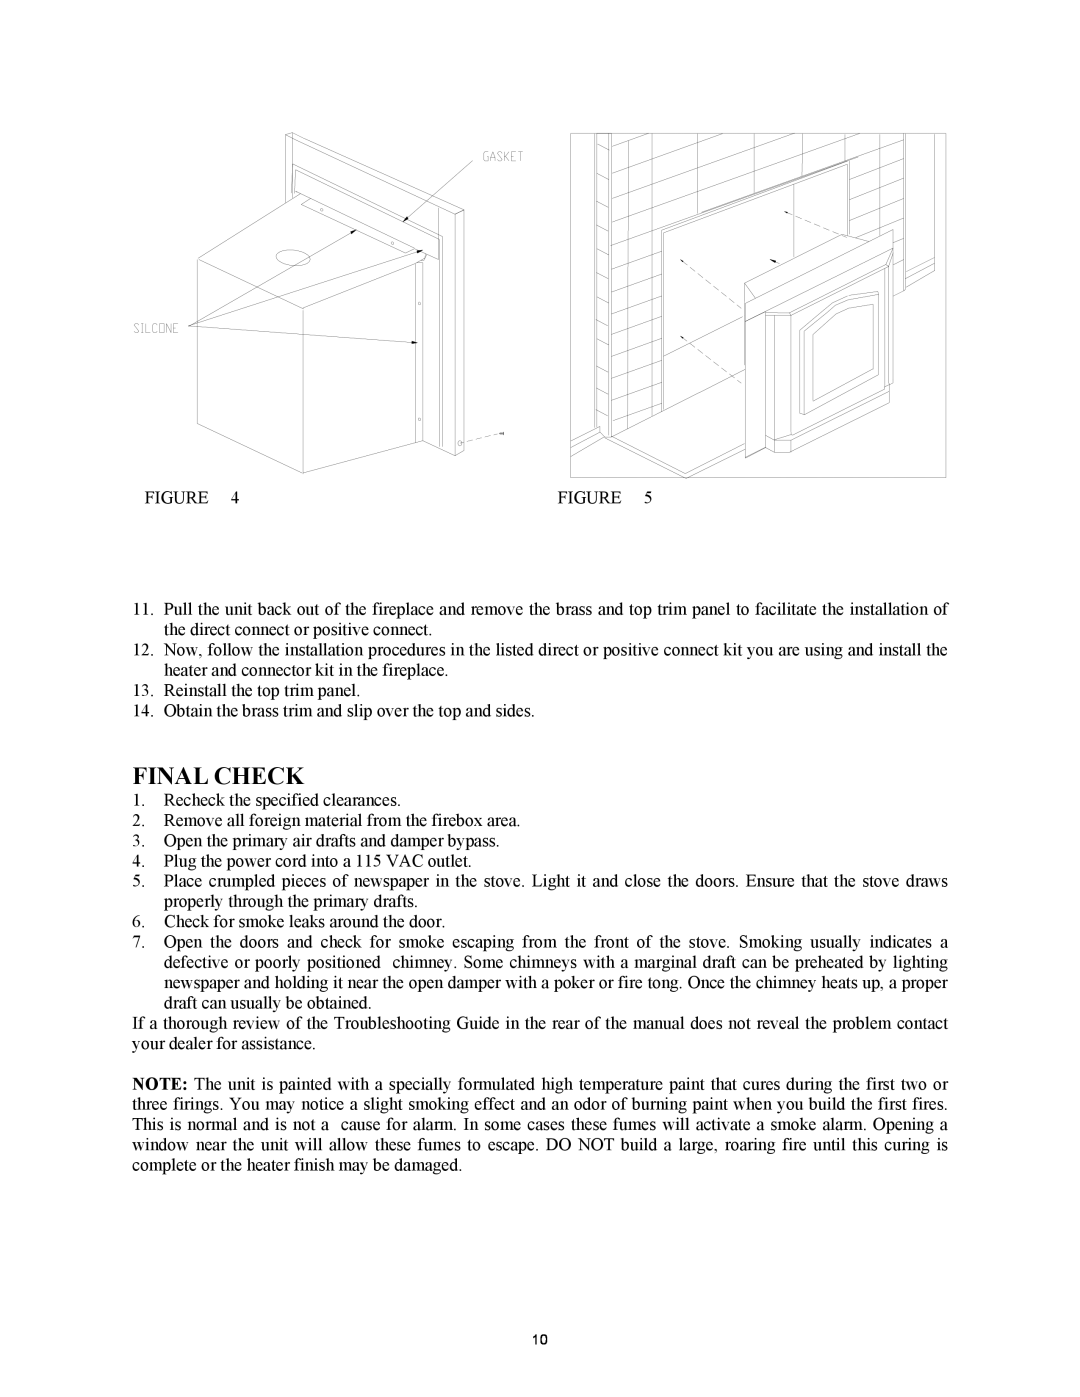 New Buck Corporation Heater Model 80 manual Final Check 